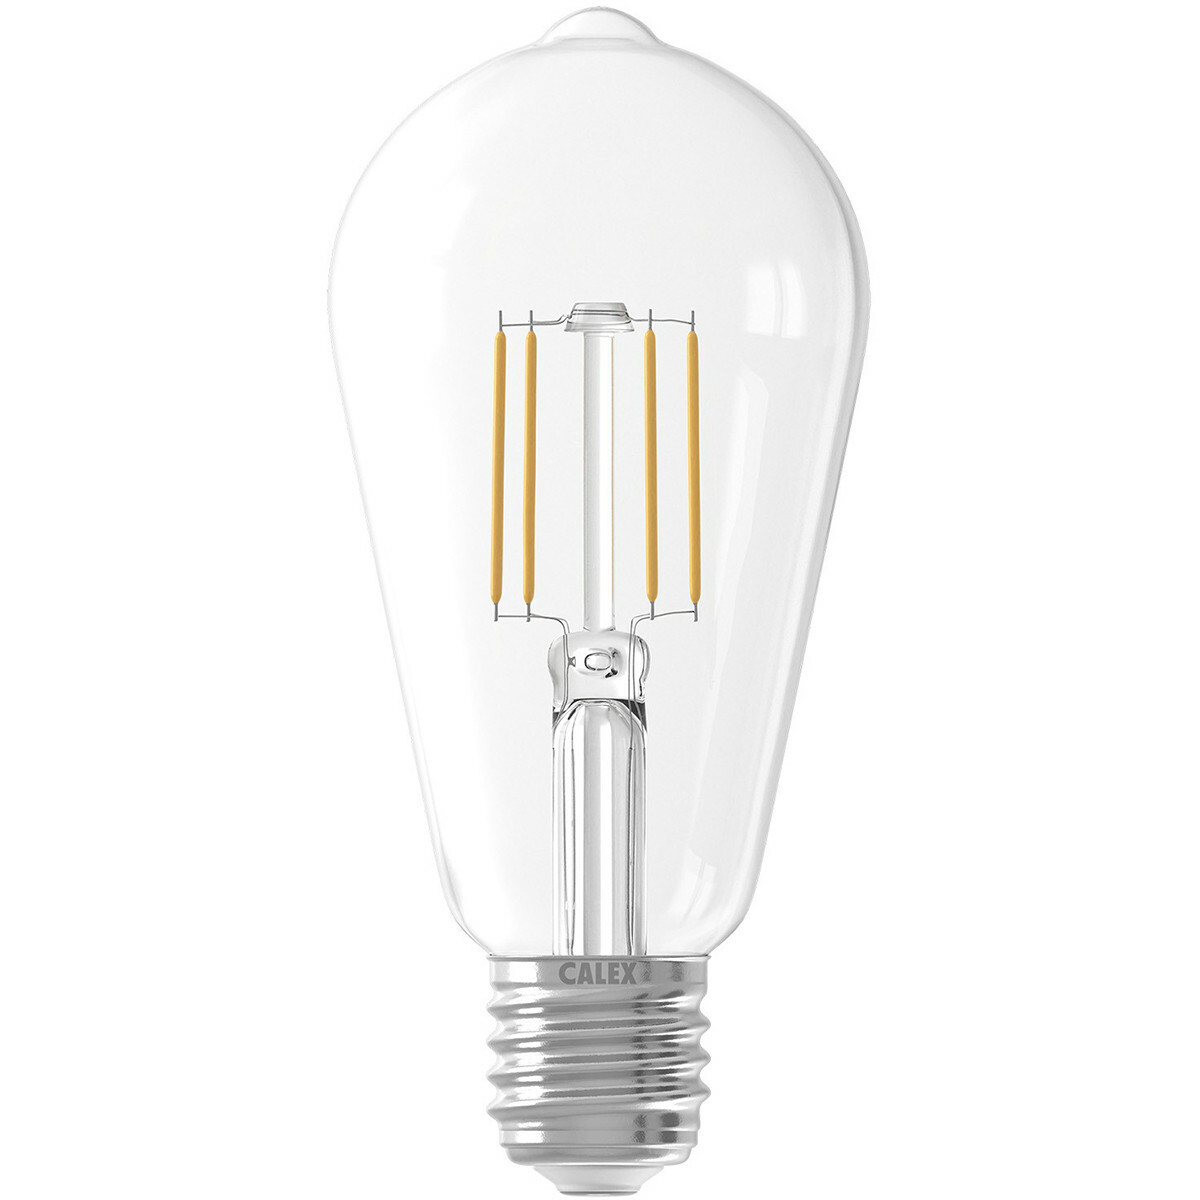 Manuscript terugtrekken Klas CALEX - LED Lamp - Filament ST64 - E27 Fitting - 6W - Warm Wit 2700K -  Transparant Helder | BES LED